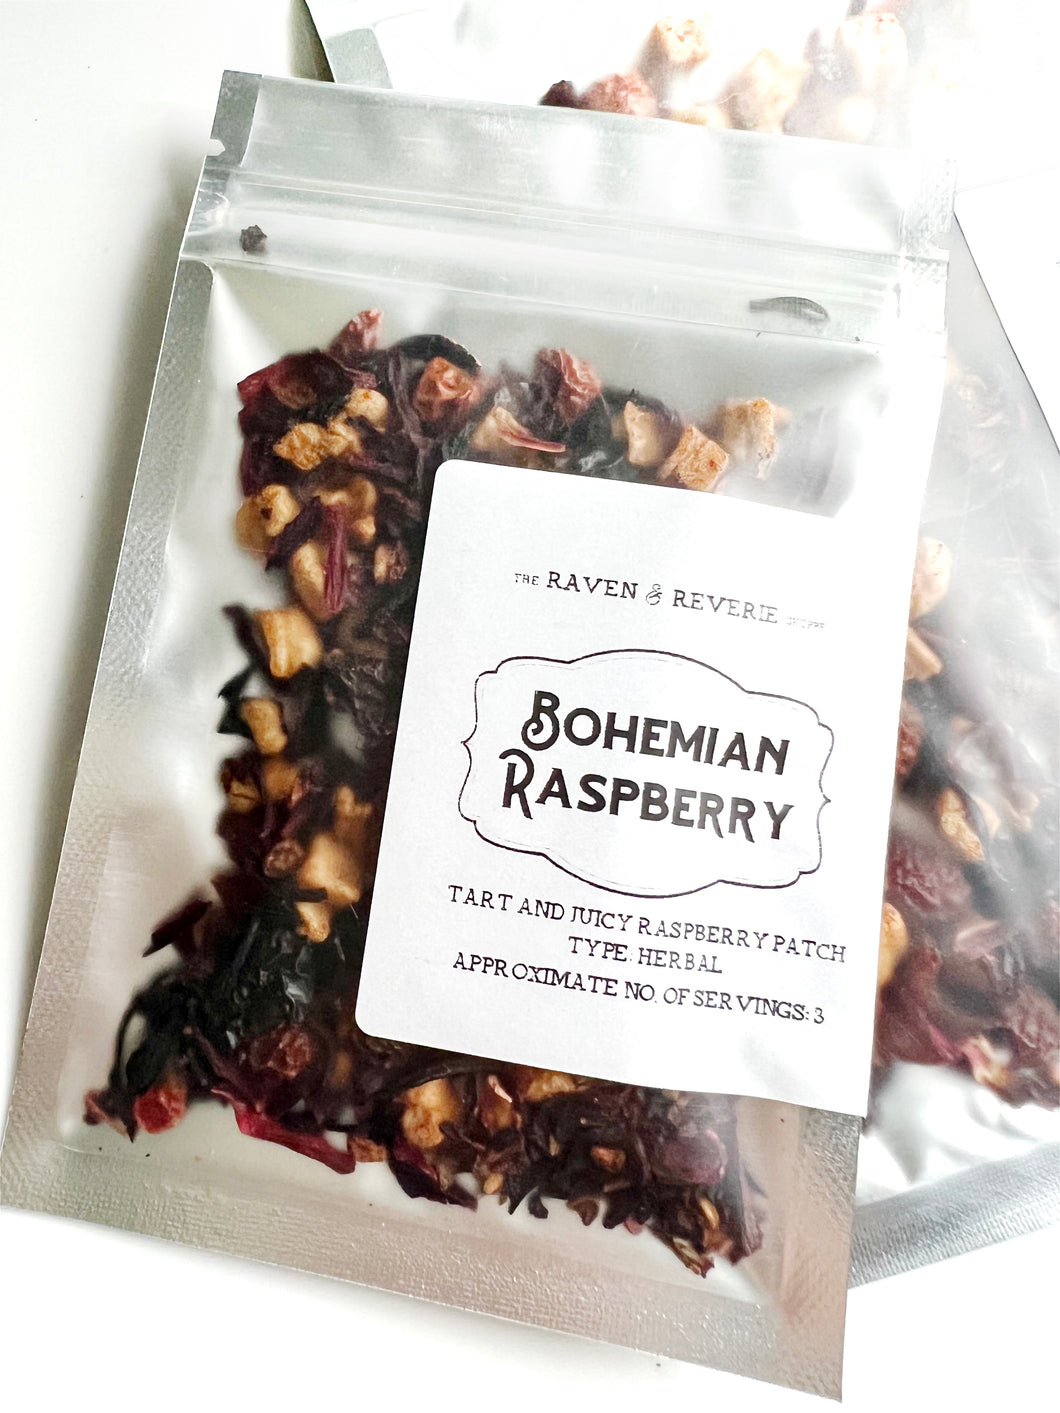 Bohemian Raspberry - tart and juicy raspberry herbal loose leaf tea